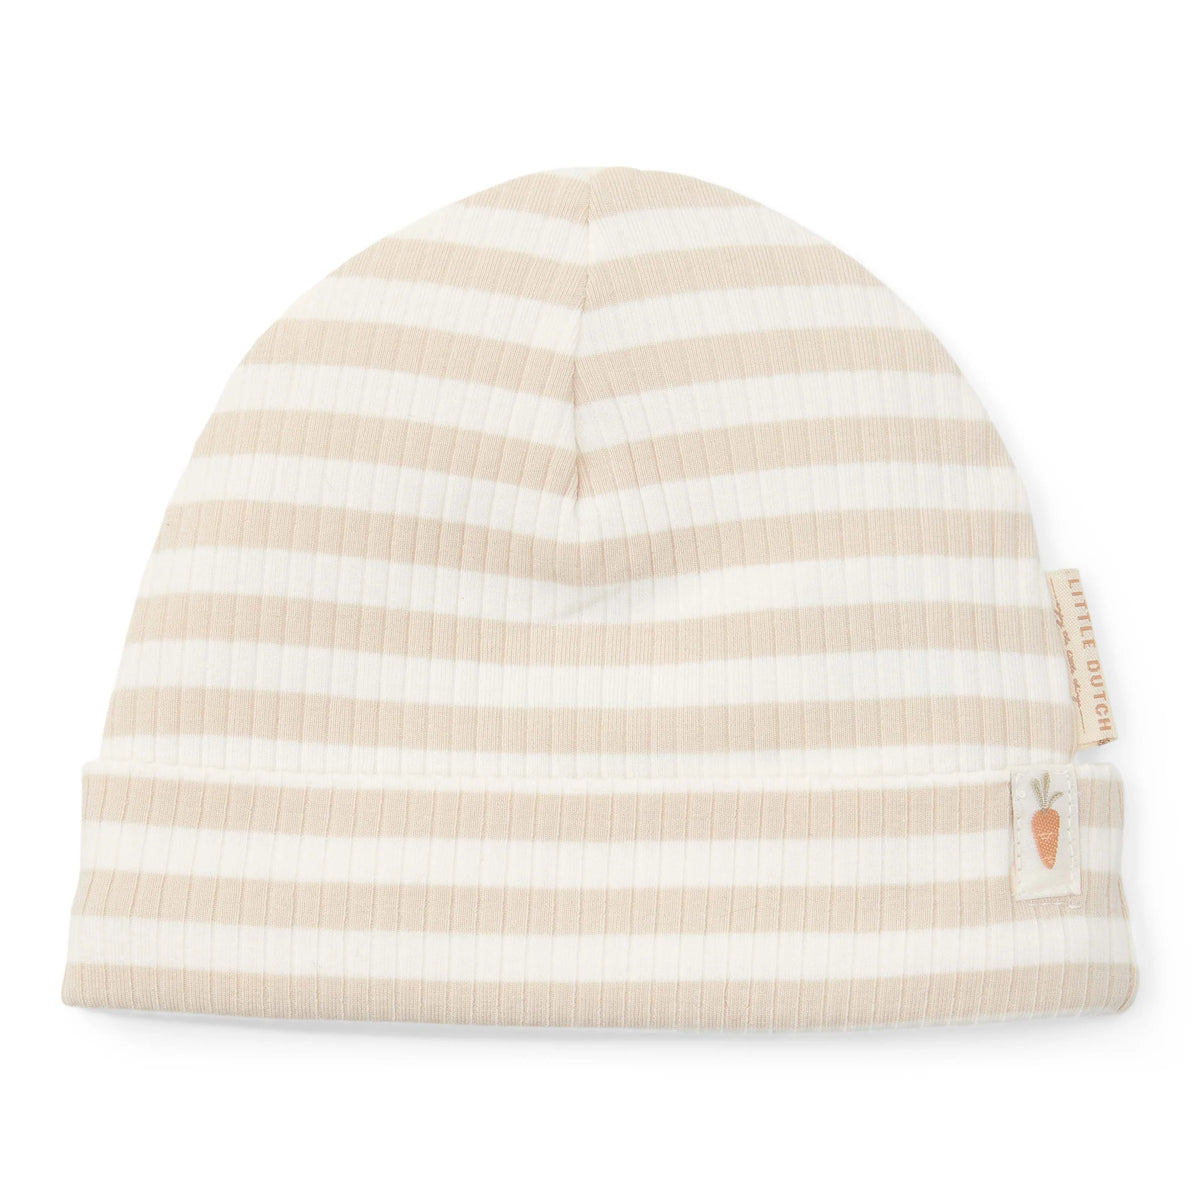 Baby cap Stripe Sand/ White